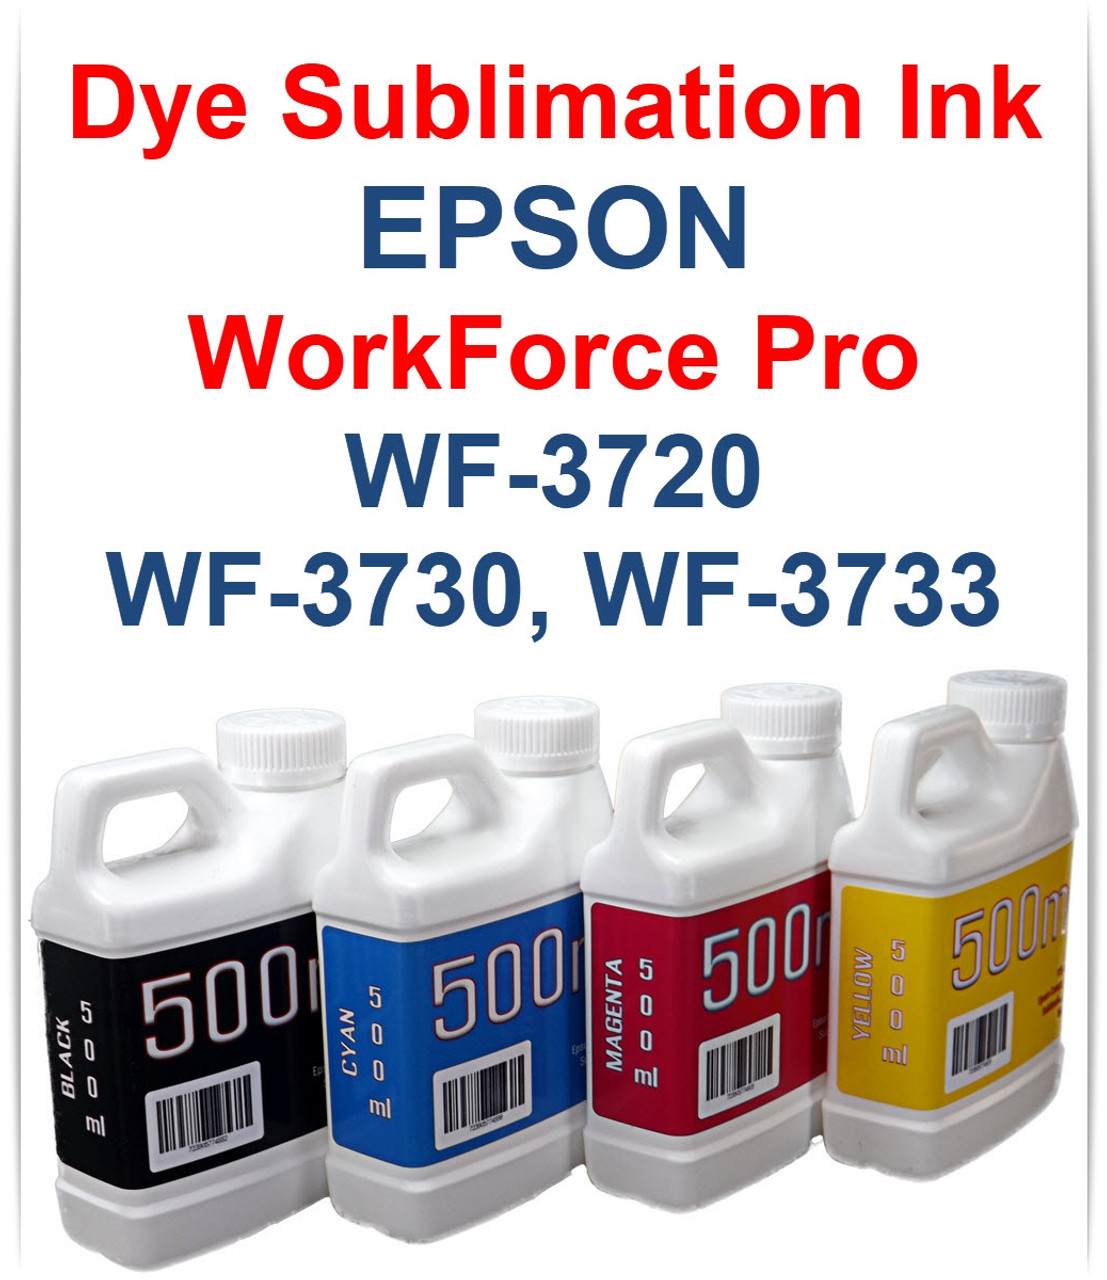 4- 500ml bottles Dye Sublimation Ink for Epson WorkForce Pro WF-3720 WF-3730 WF-3733 Printers